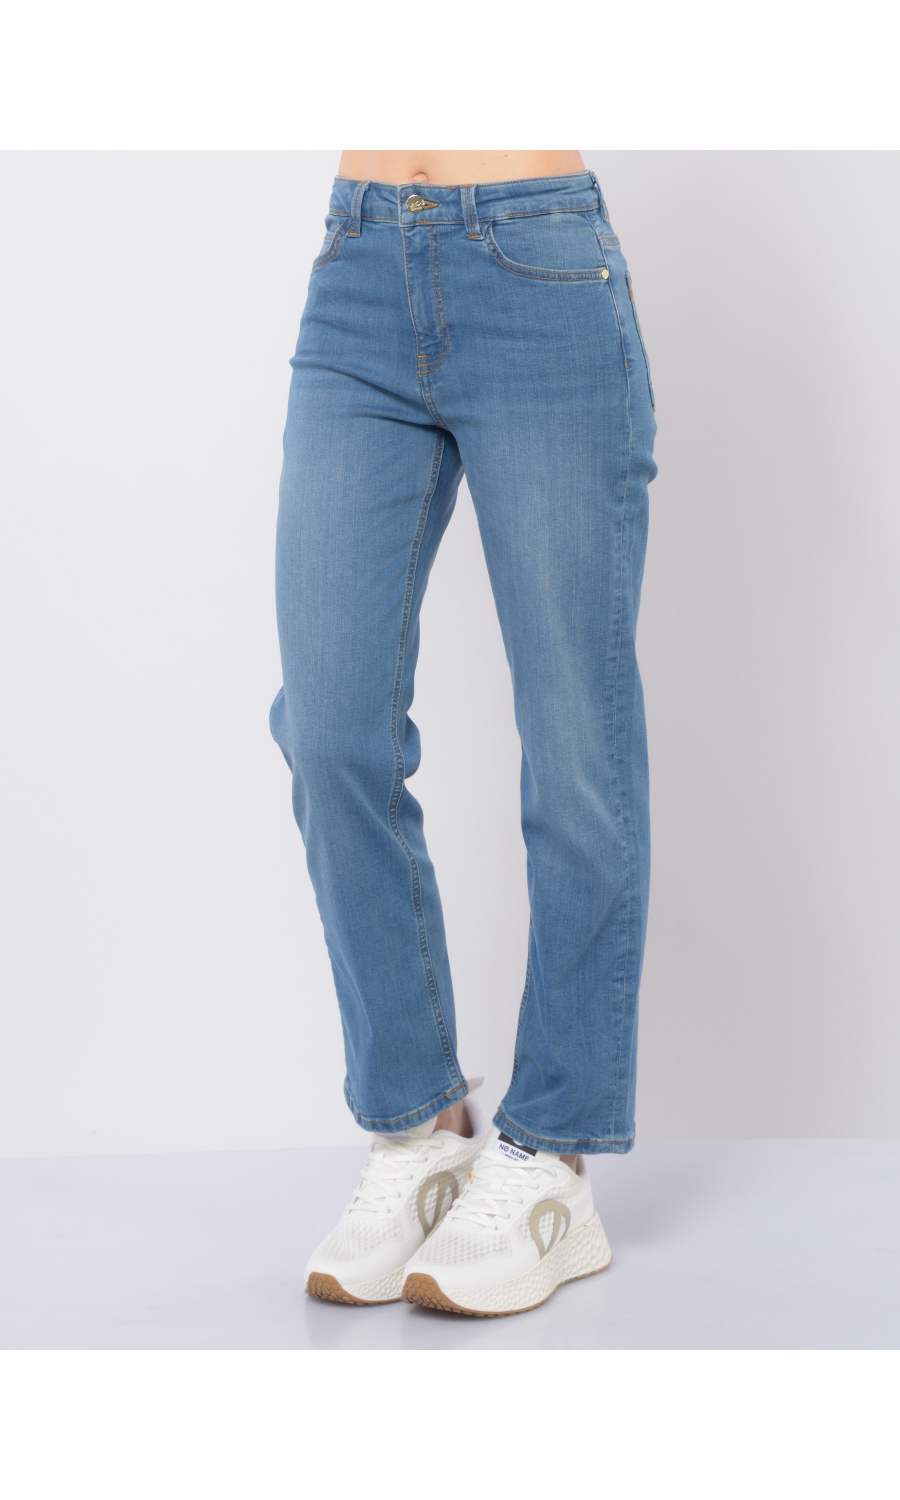 jeans da donna Kaos cropped cinque tasche